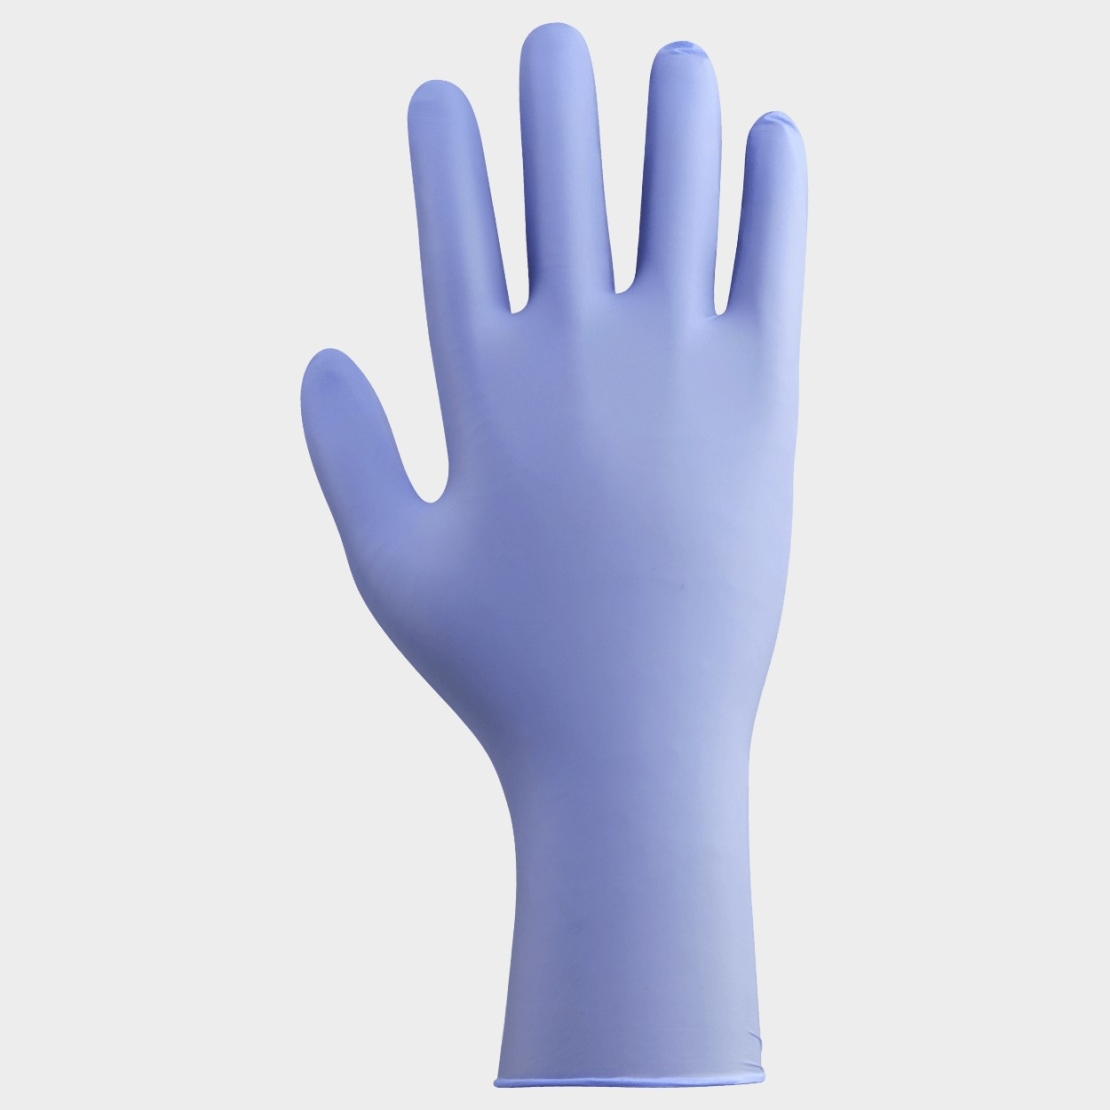 SETINO NITRILE VIOLET Еднократни ръкавици от нитрил